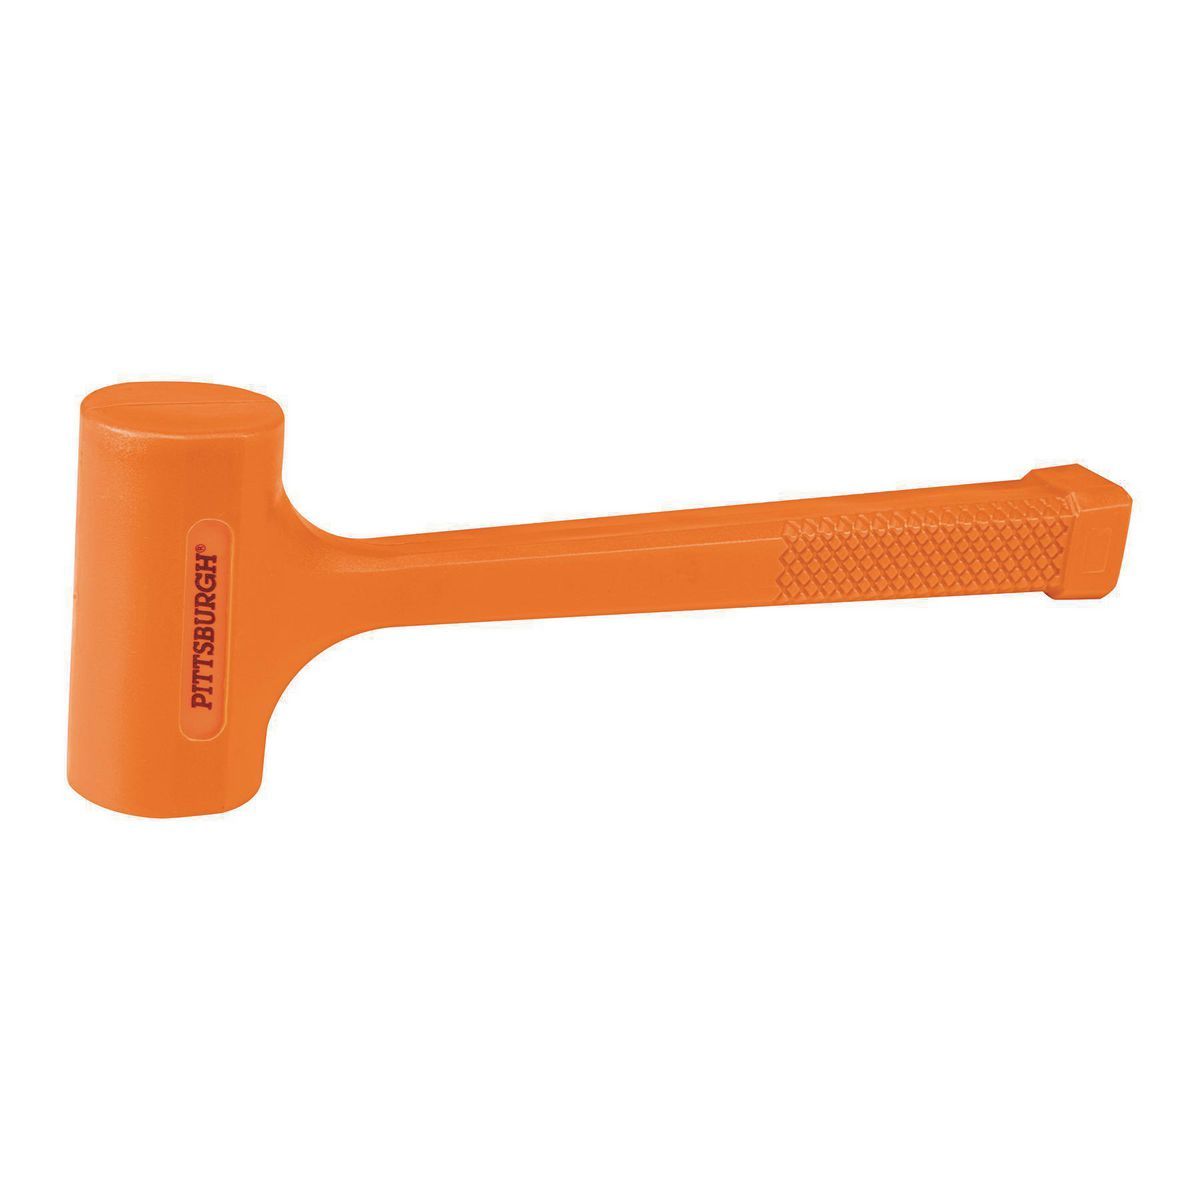 PITTSBURGH 4 lb. Neon Orange Dead Blow Hammer